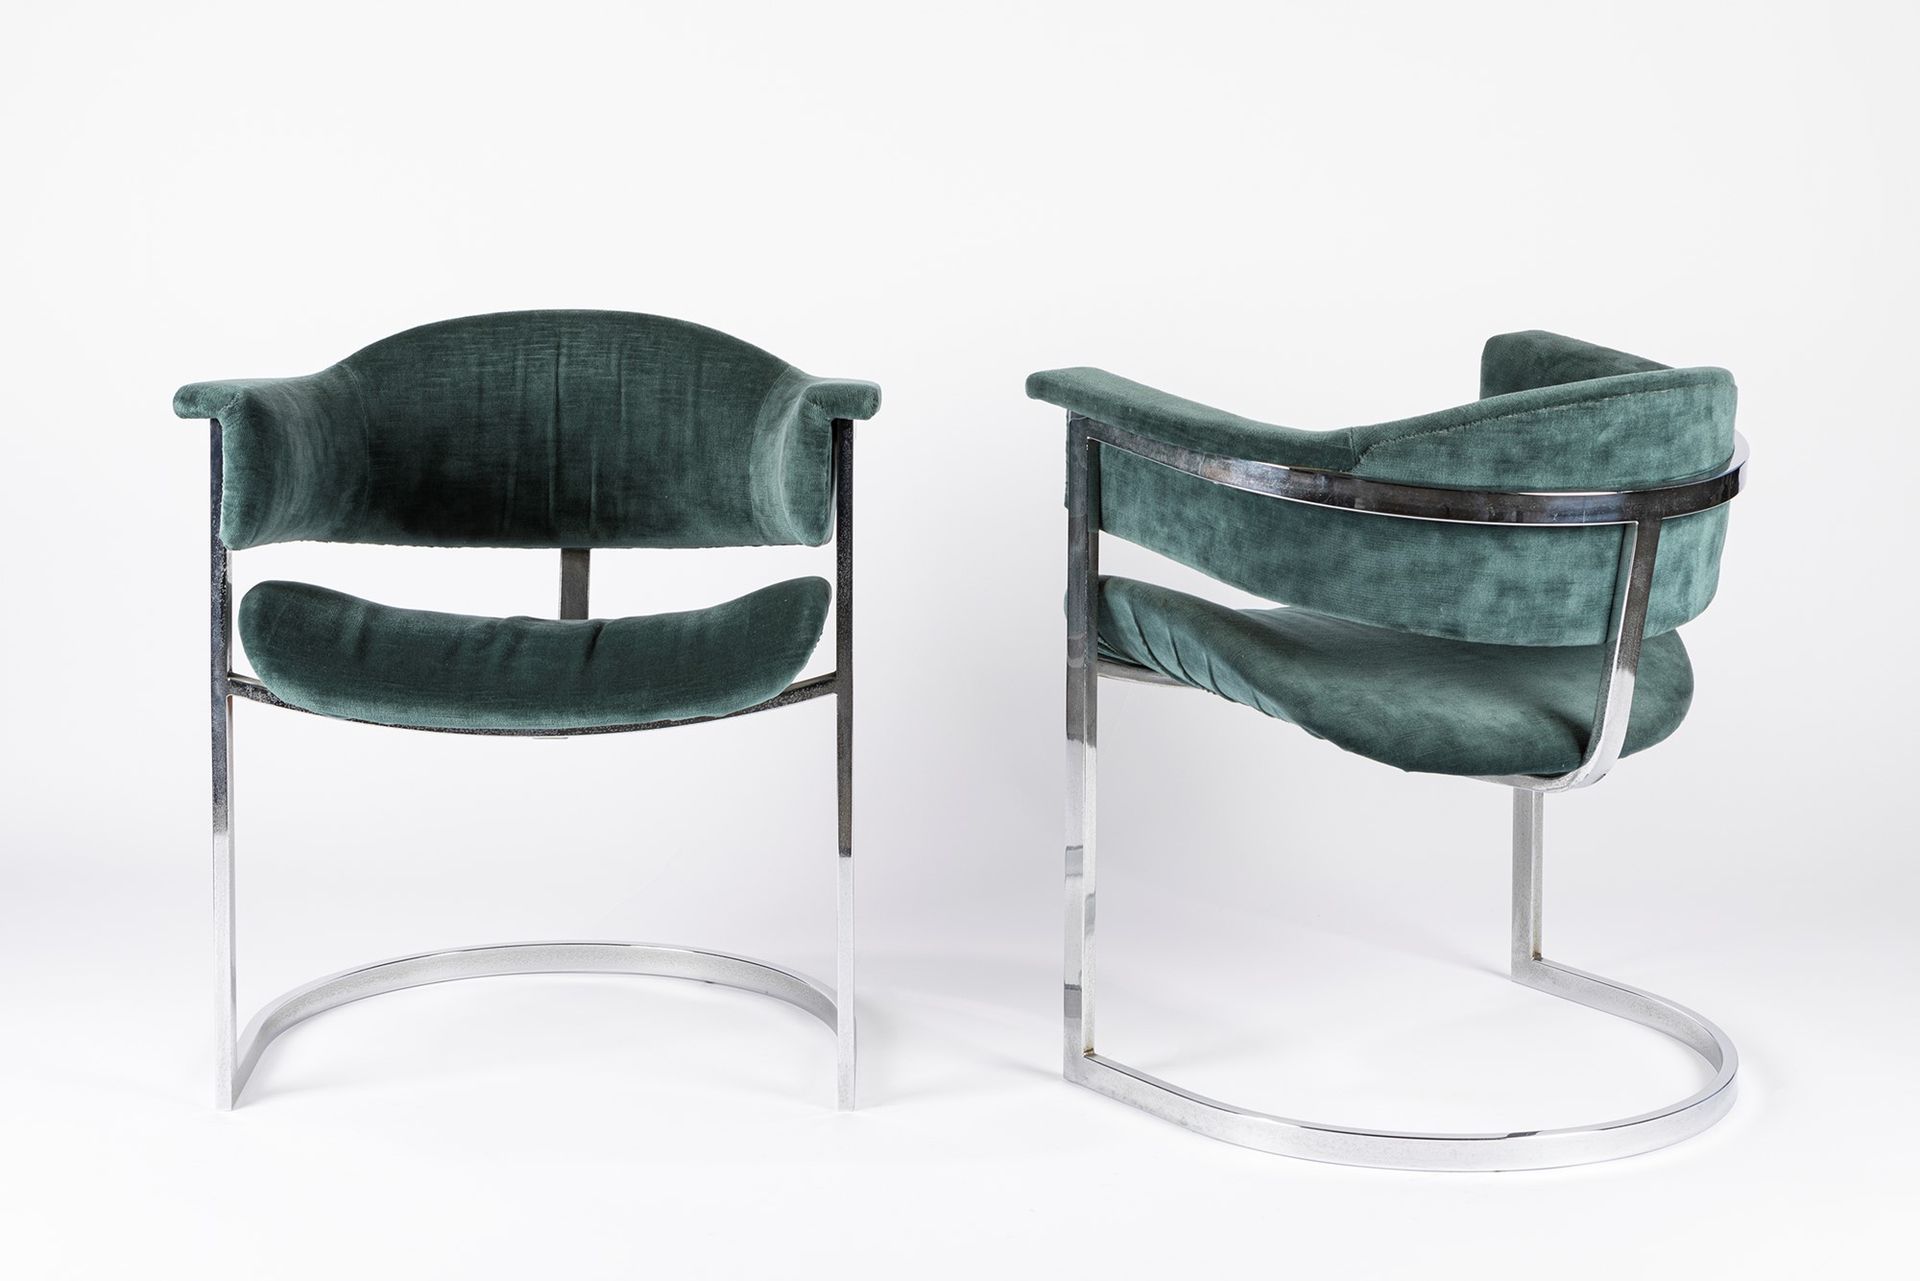 Vittorio introini 两把椅子，1970年约

63×43×56厘米
镀铬钢和天鹅绒扶手和座椅。

军刀制造。